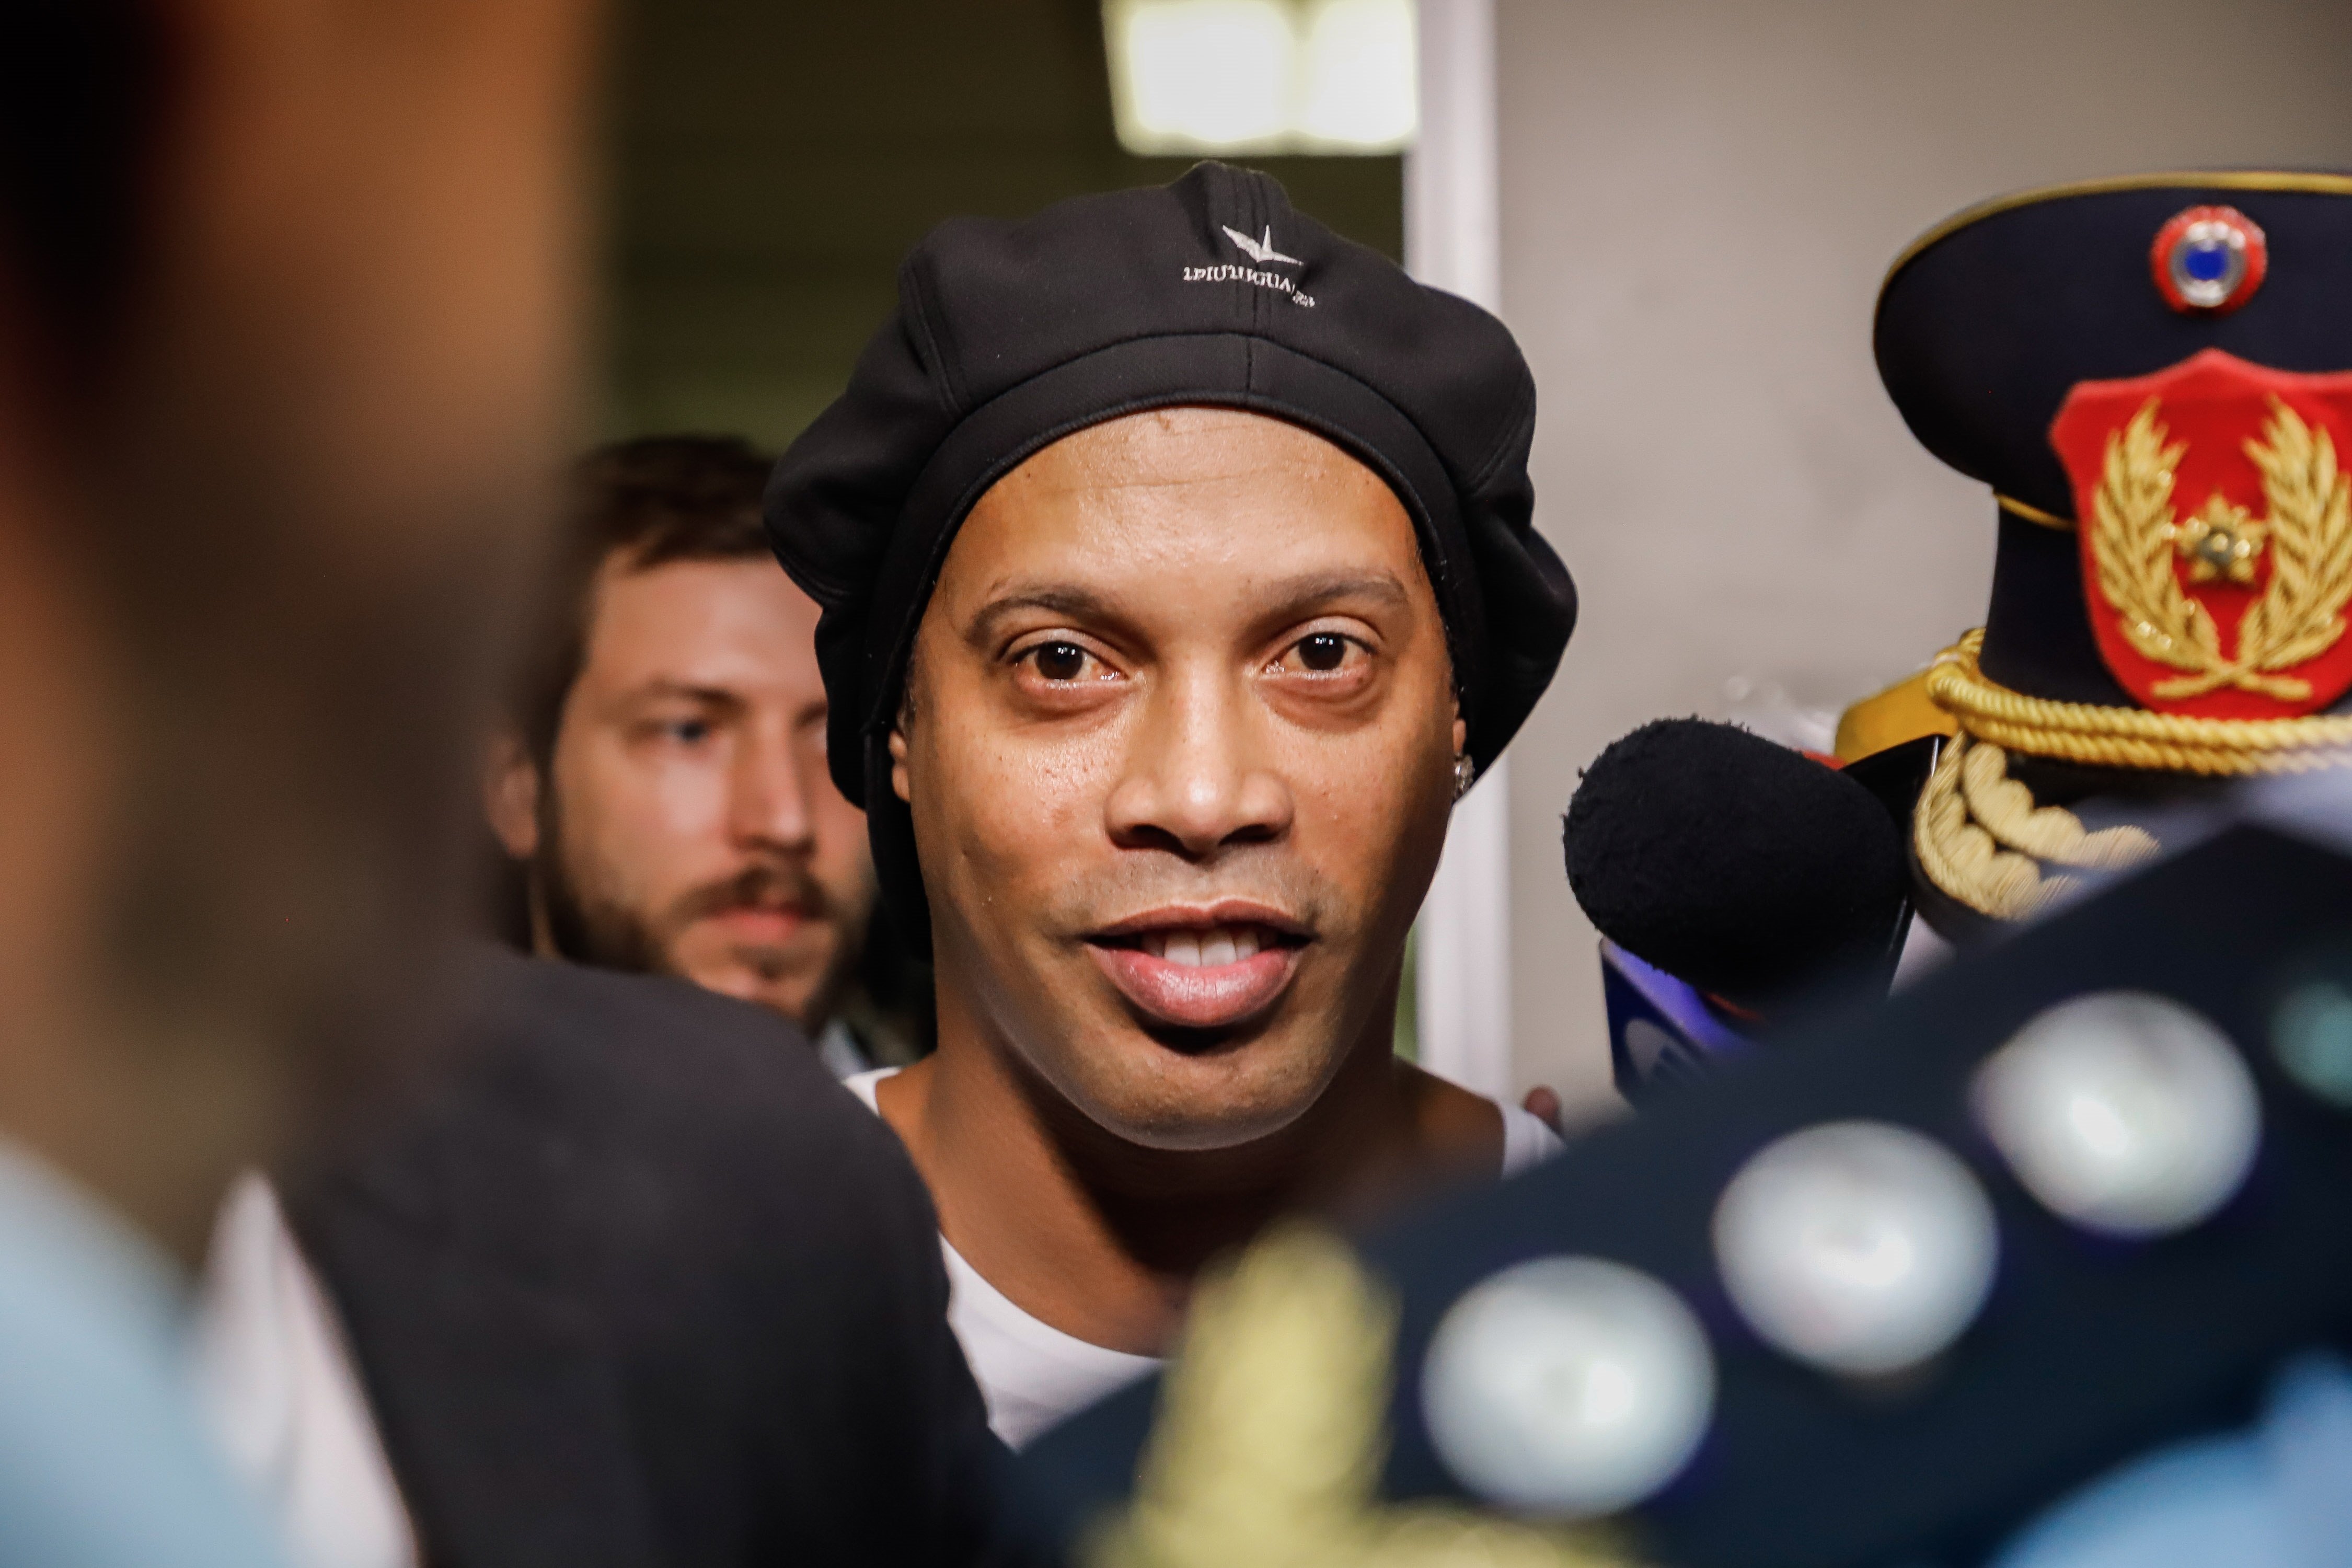 La primera chocante imagen de Ronaldinho dentro de la cárcel